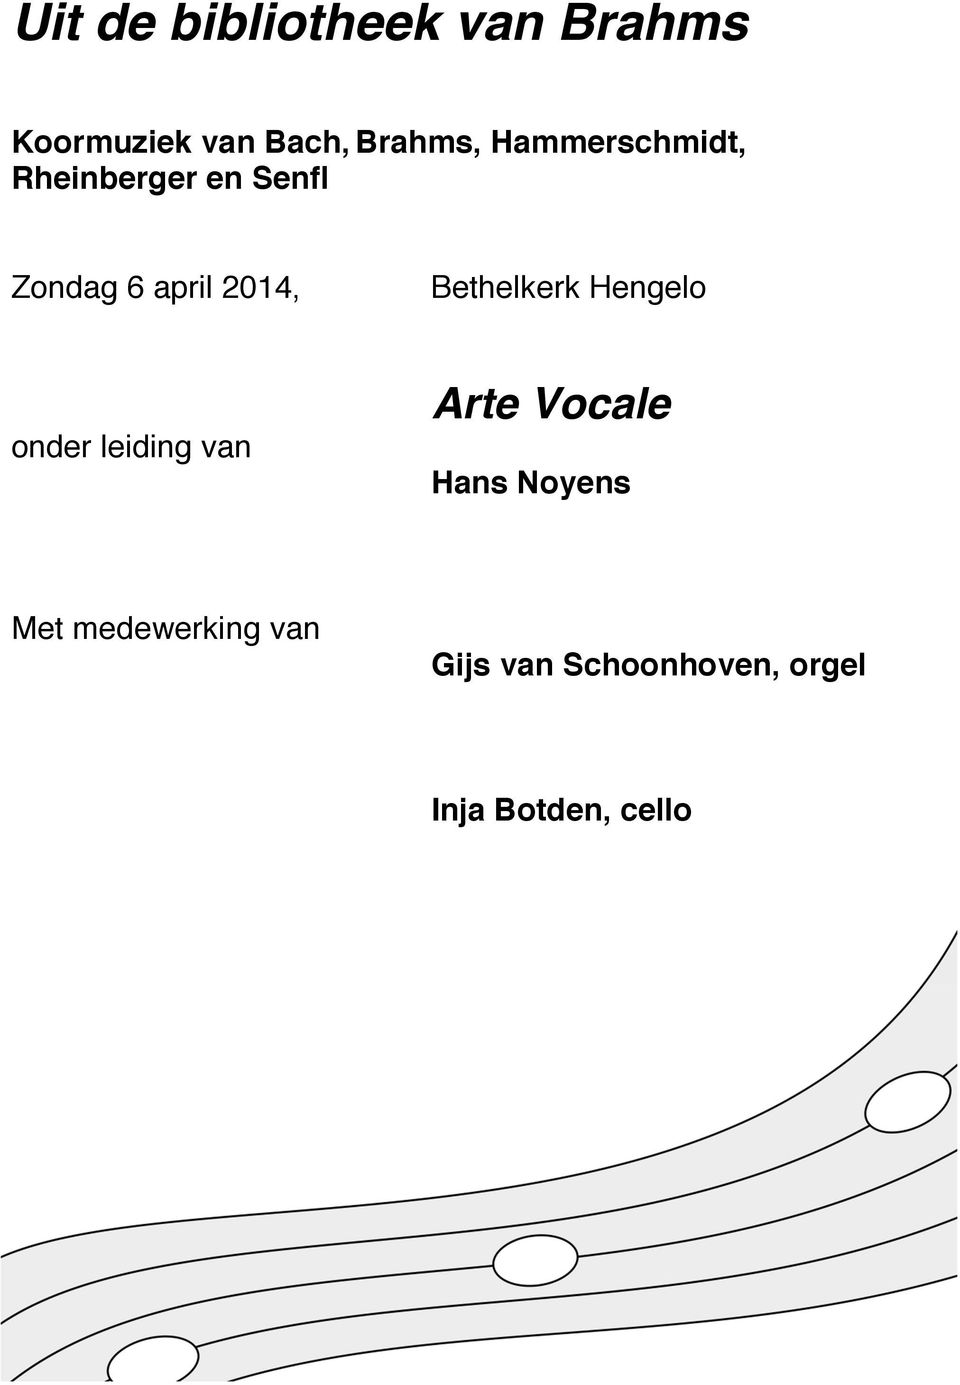 Bethelkerk Hengelo onder leiding van Arte Vocale Hans Noyens